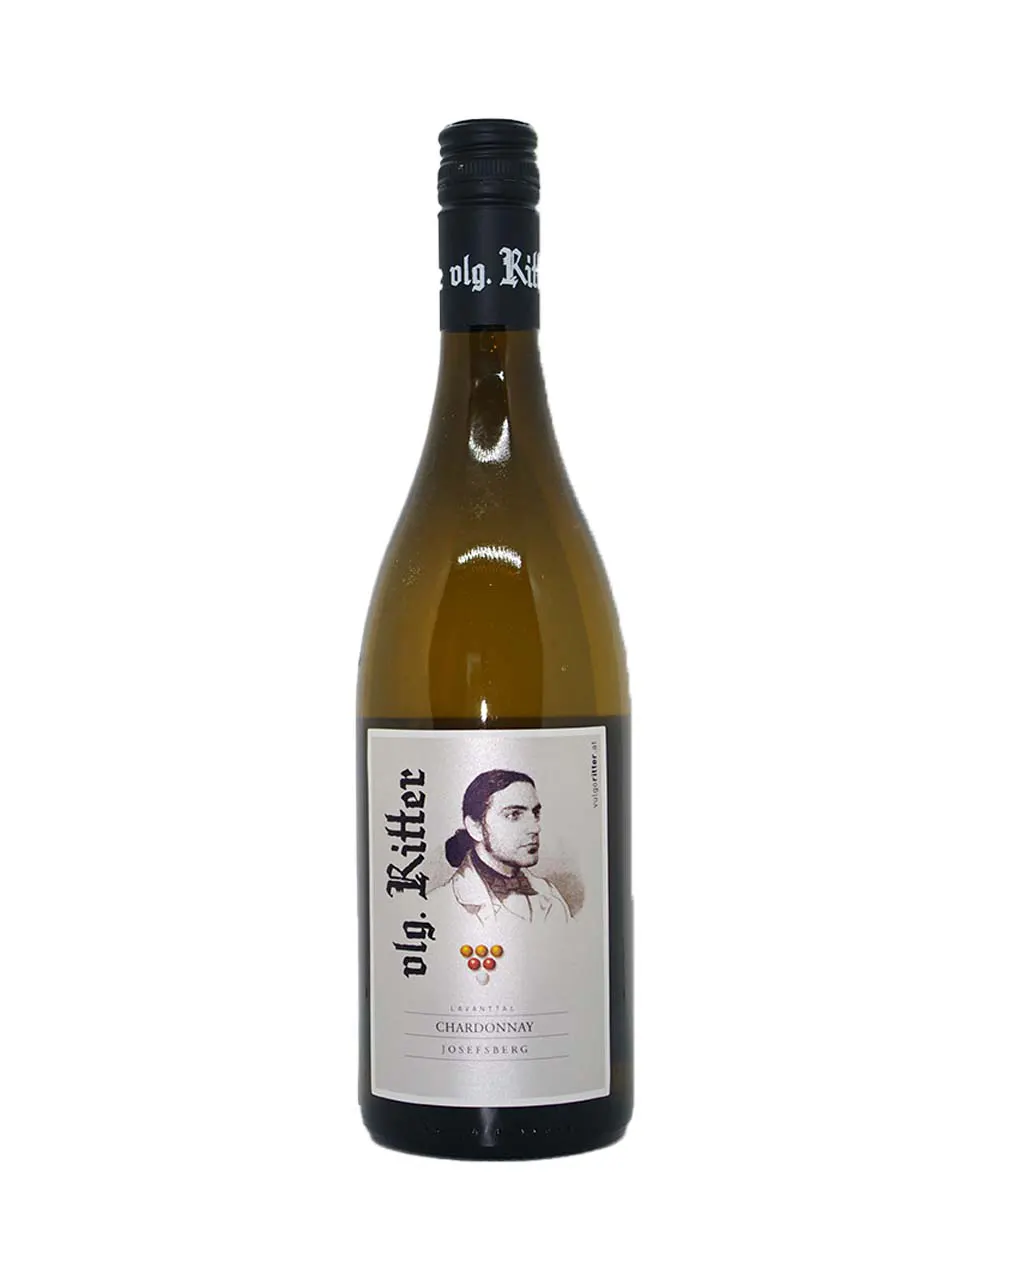 Chardonnay Josefsberg 2016 - vlg. Ritter